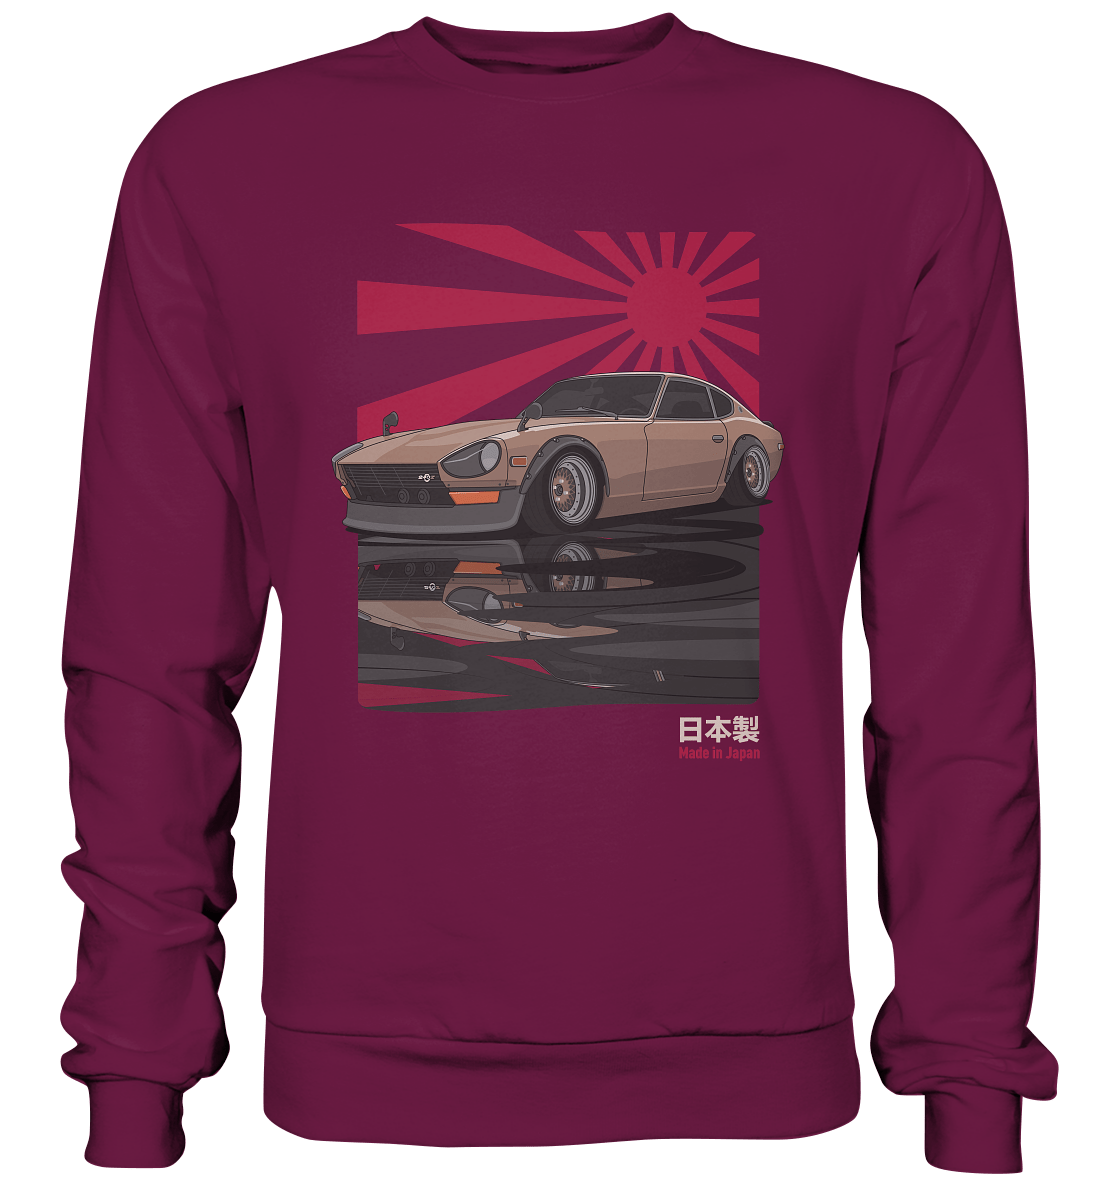 240Z Rising Sun - Premium Sweatshirt - MotoMerch.de